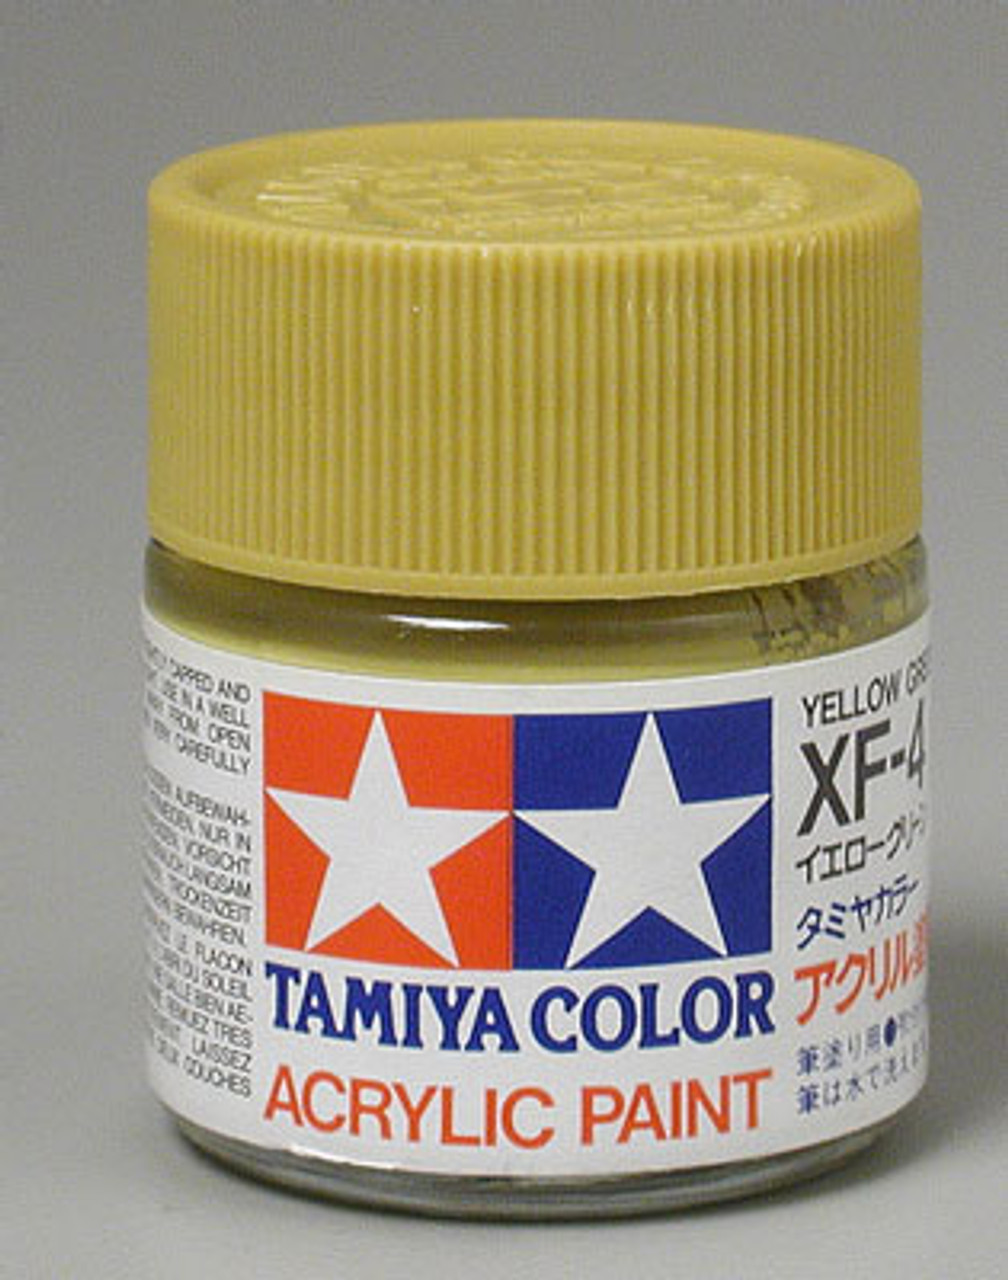 Tamiya Acrylic Mini Xf-4 Yellow Green Paint 10ml